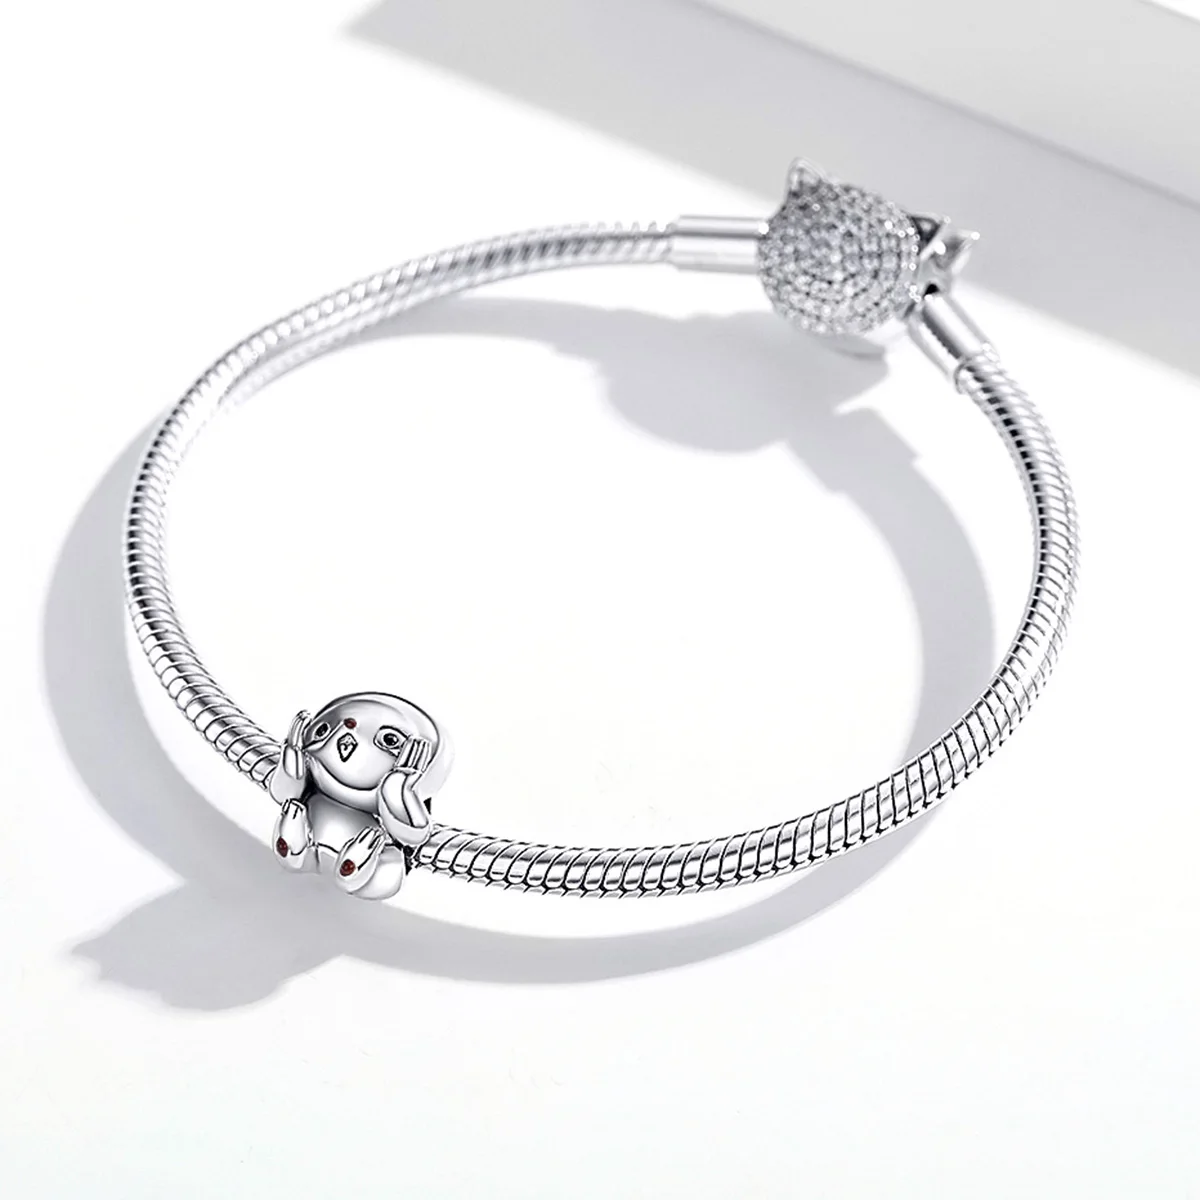 

New Type Fashion Women Jewelry 925 Oxidized Silver Sloth Animal Bracelets For Charms